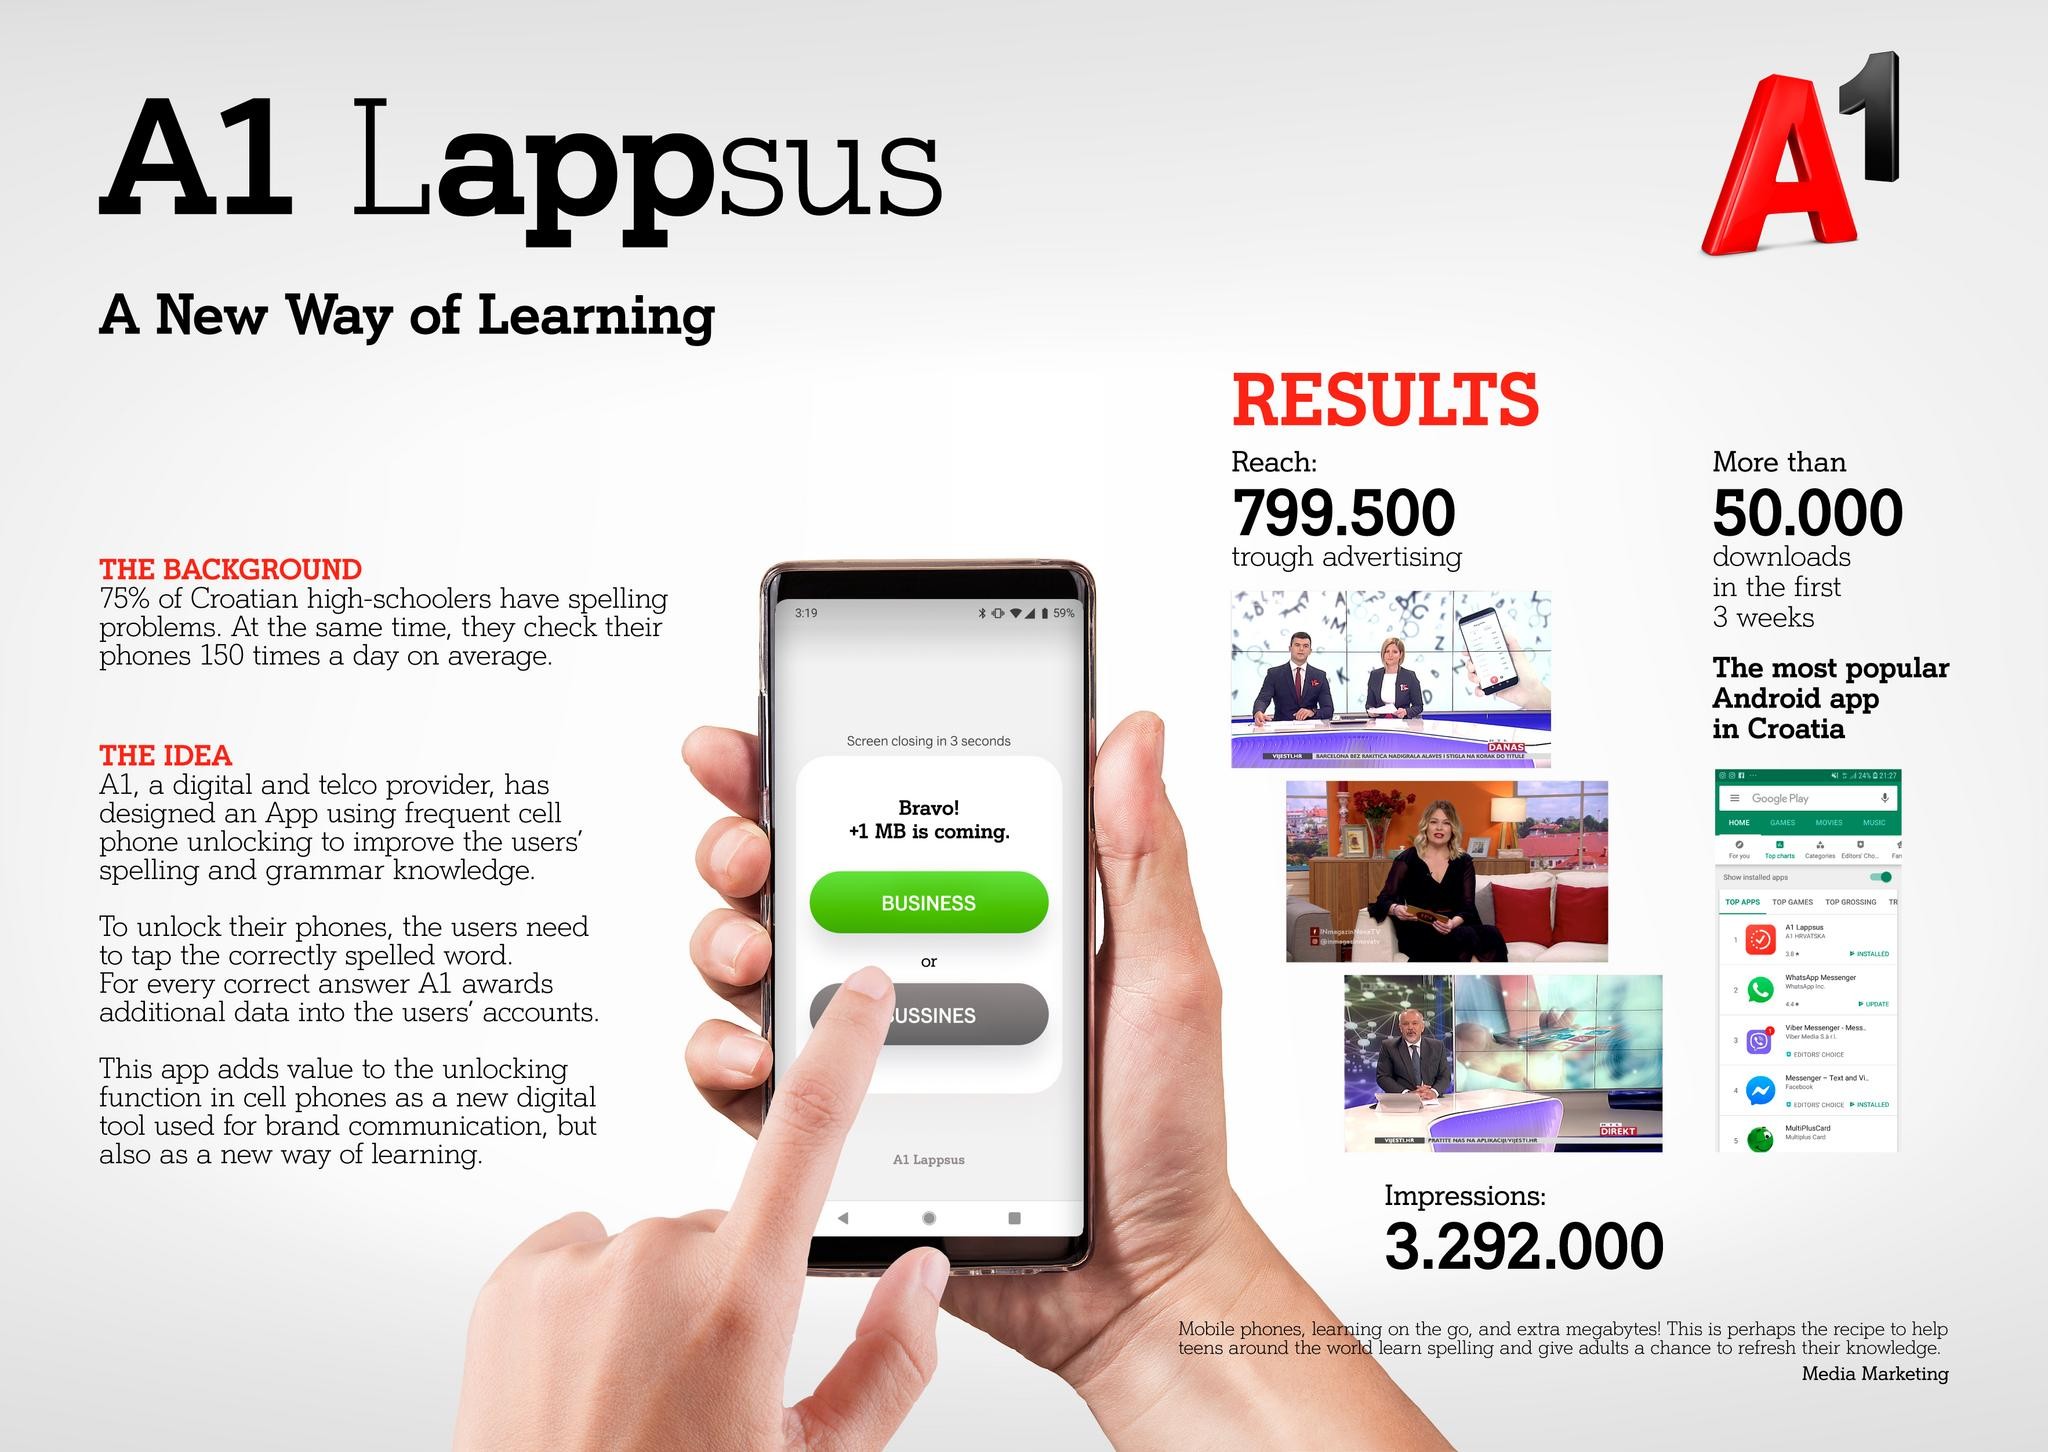 A1 LAPPSUS  THE NEW WAY OF LEARNING